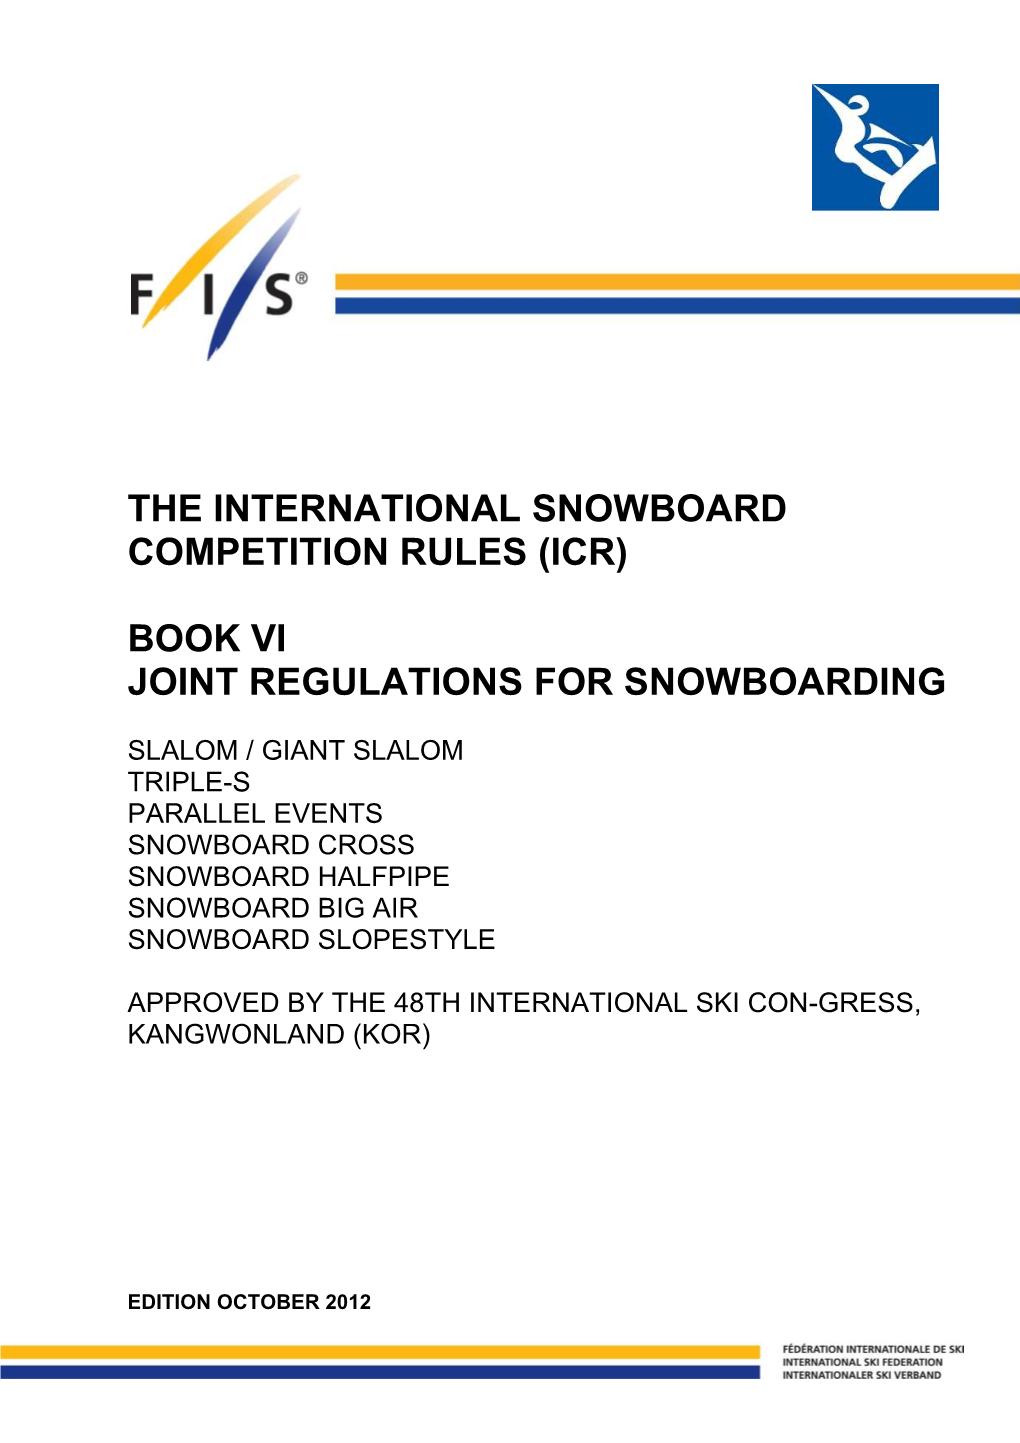 SB FIS ICR 12 Snowboard Final Edited